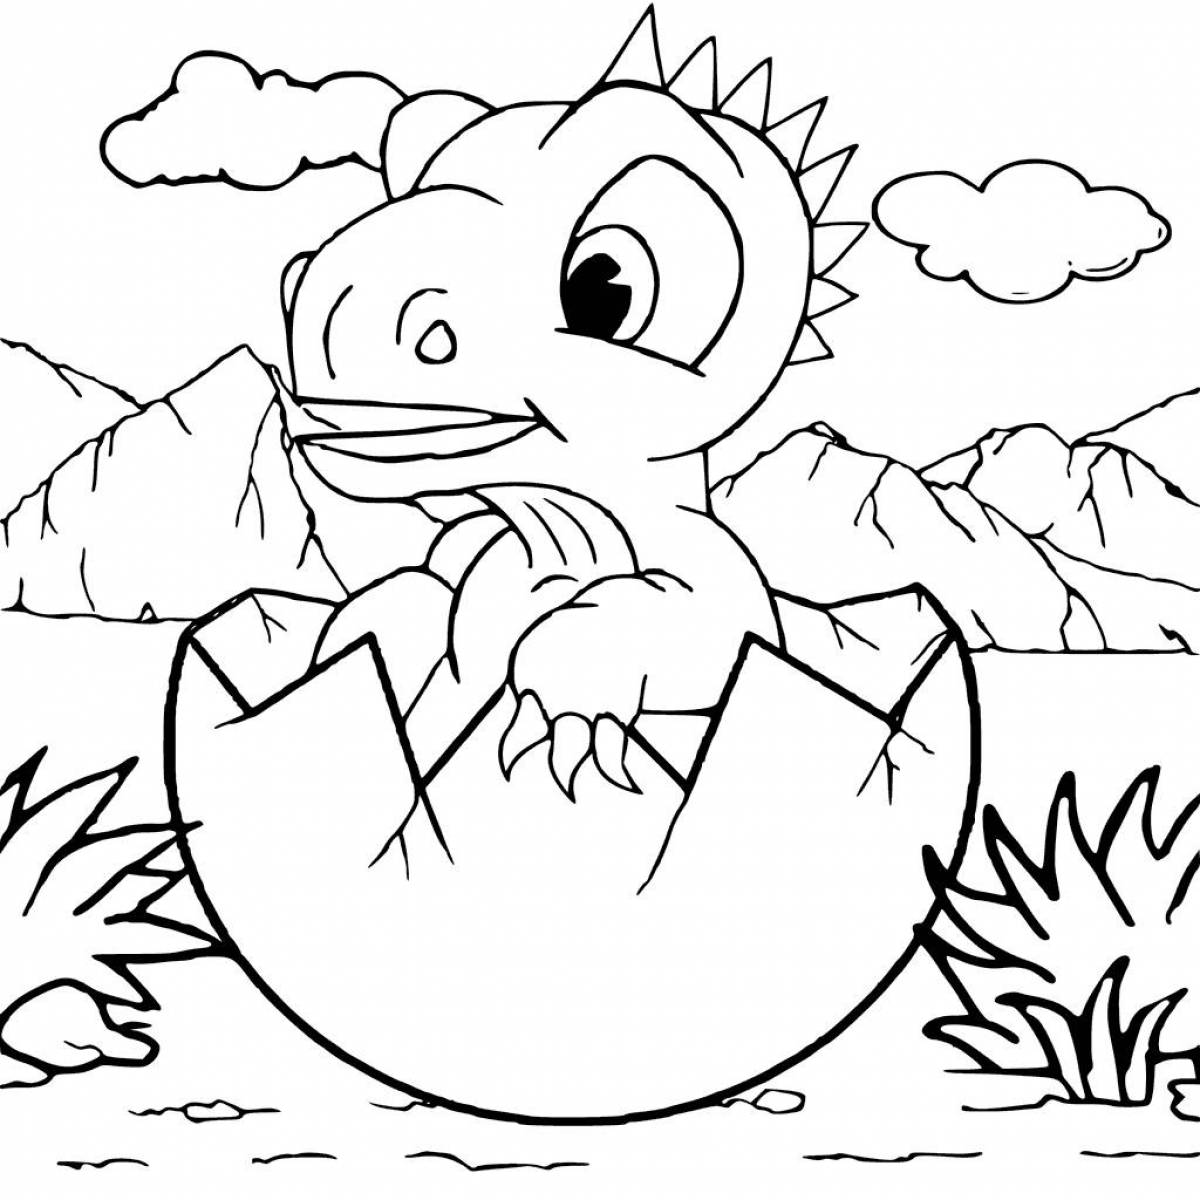 Inspirational dinosaur coloring book for kids